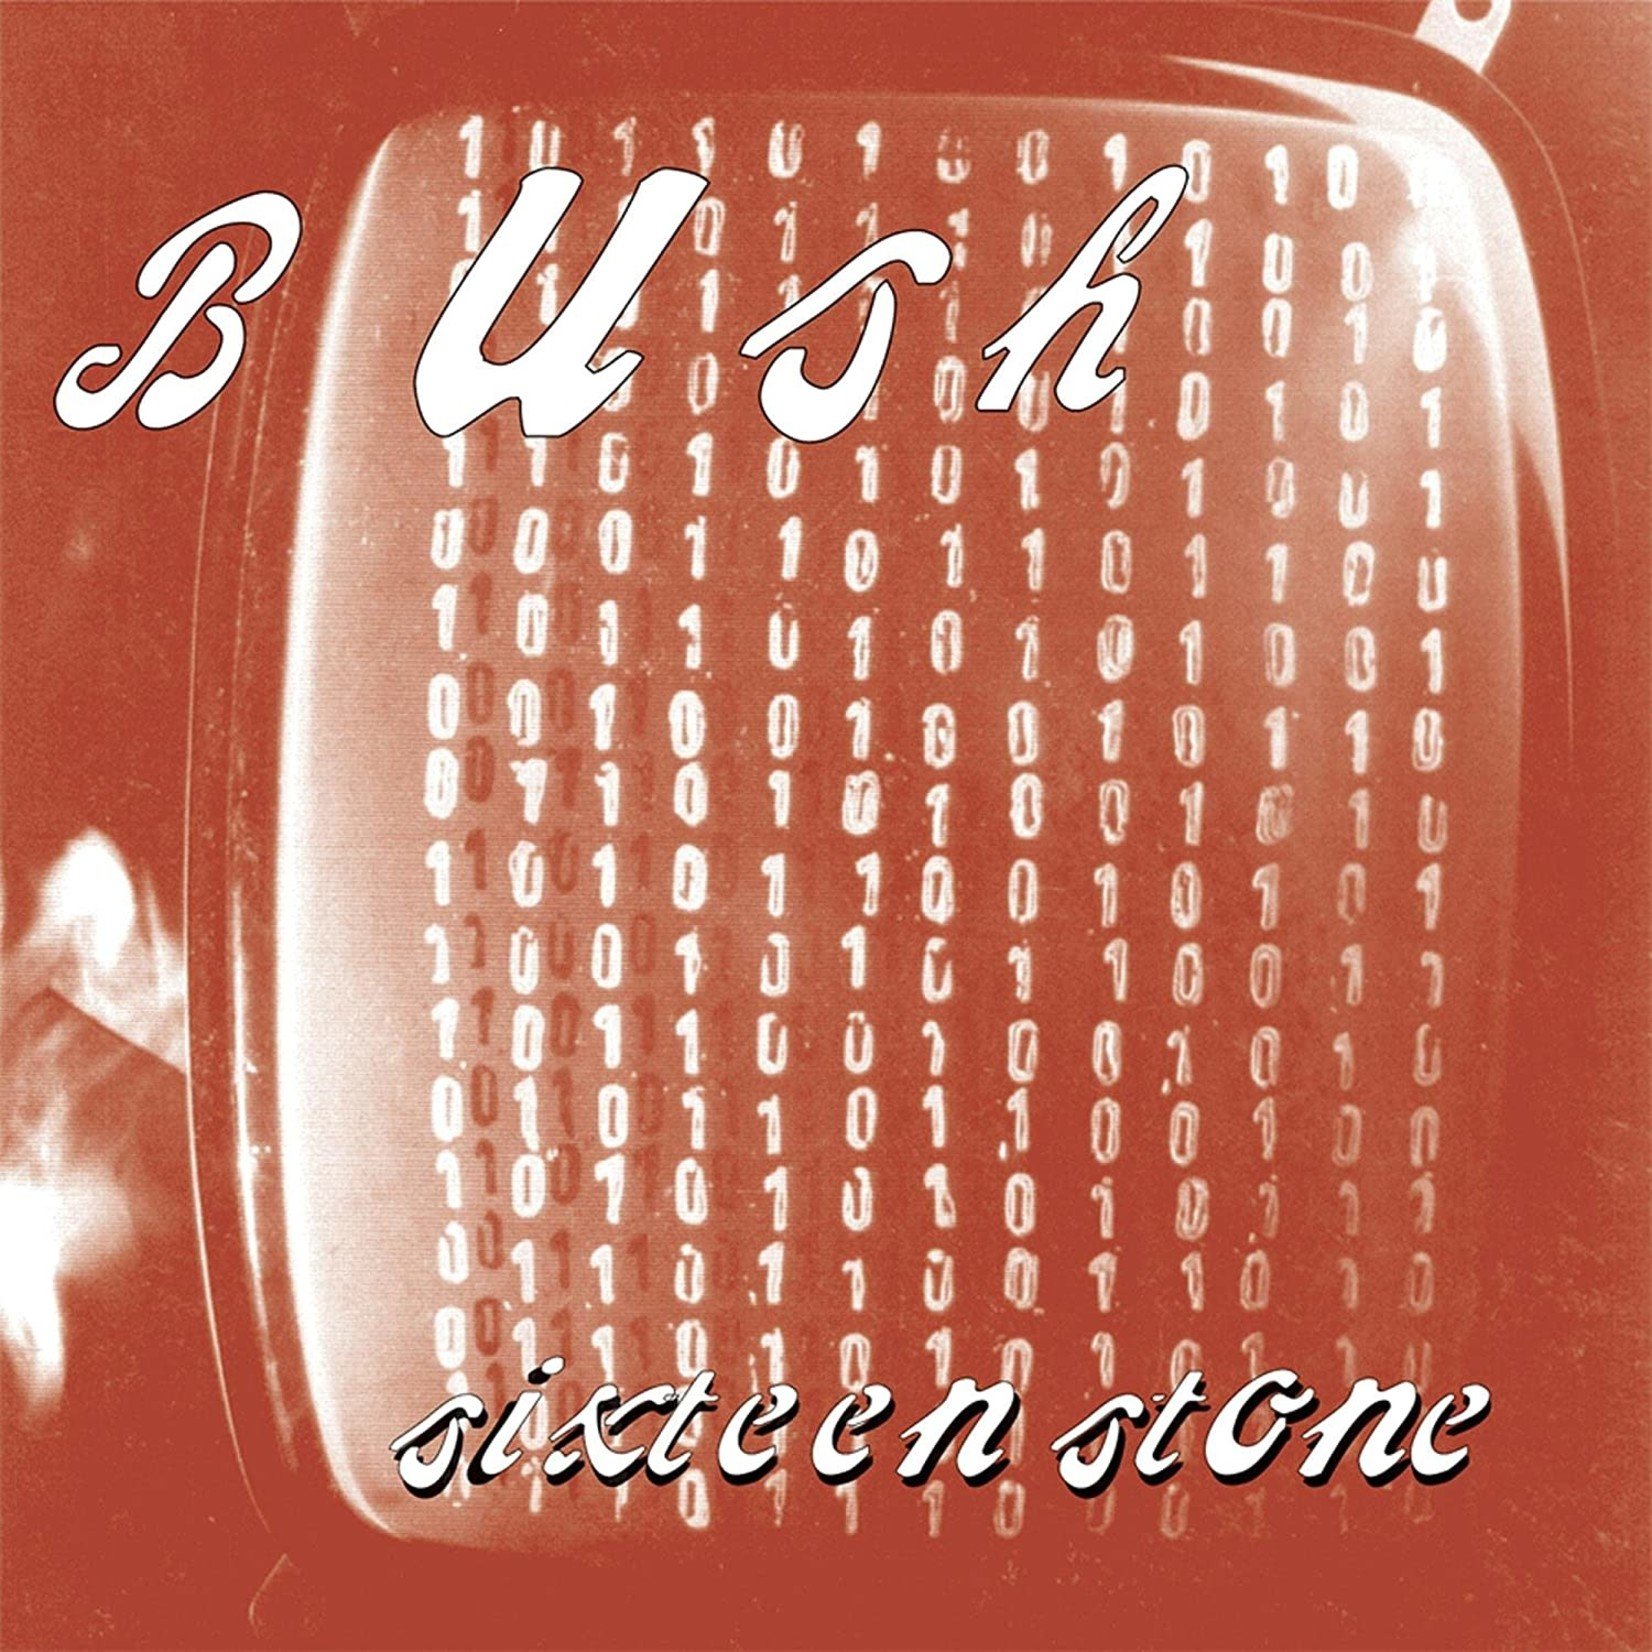 Bush - Sixteen Stone [USED CD]